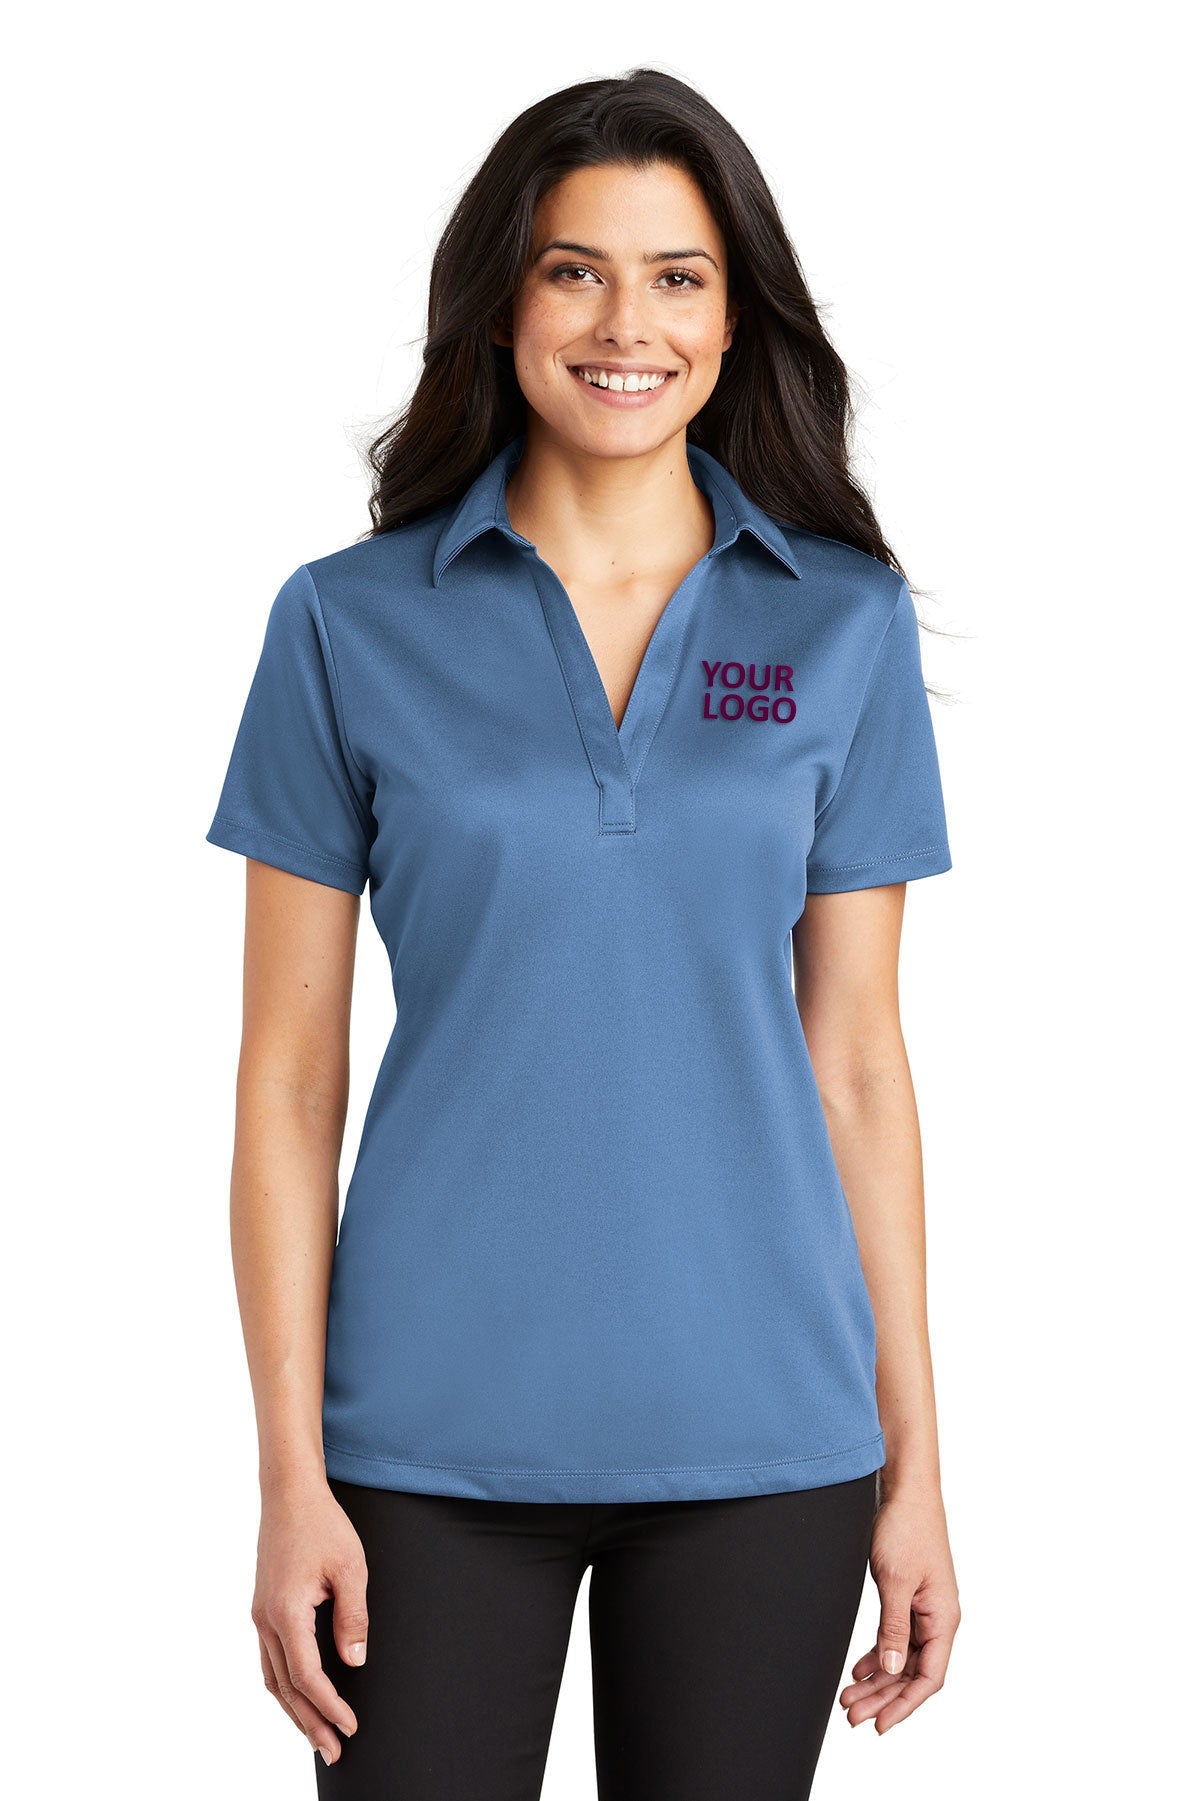 port authority carolina blue l540 custom polo shirts for work